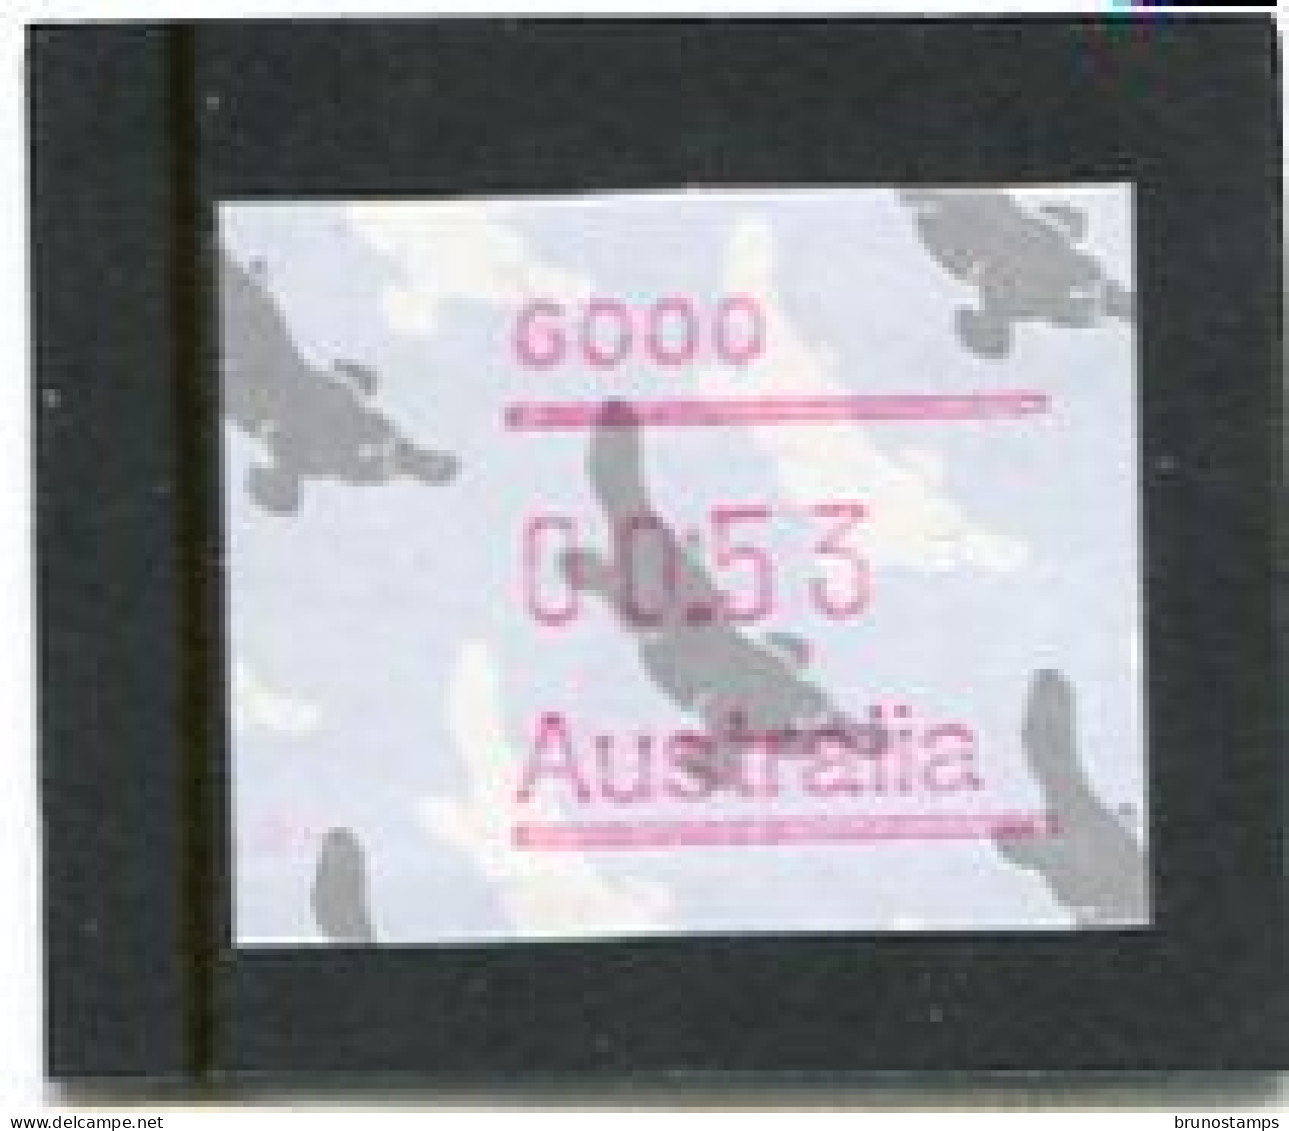 AUSTRALIA - 1987  53c  FRAMA  PLATYPUS  POSTCODE  6000 (PERTH)  MINT NH - Timbres De Distributeurs [ATM]